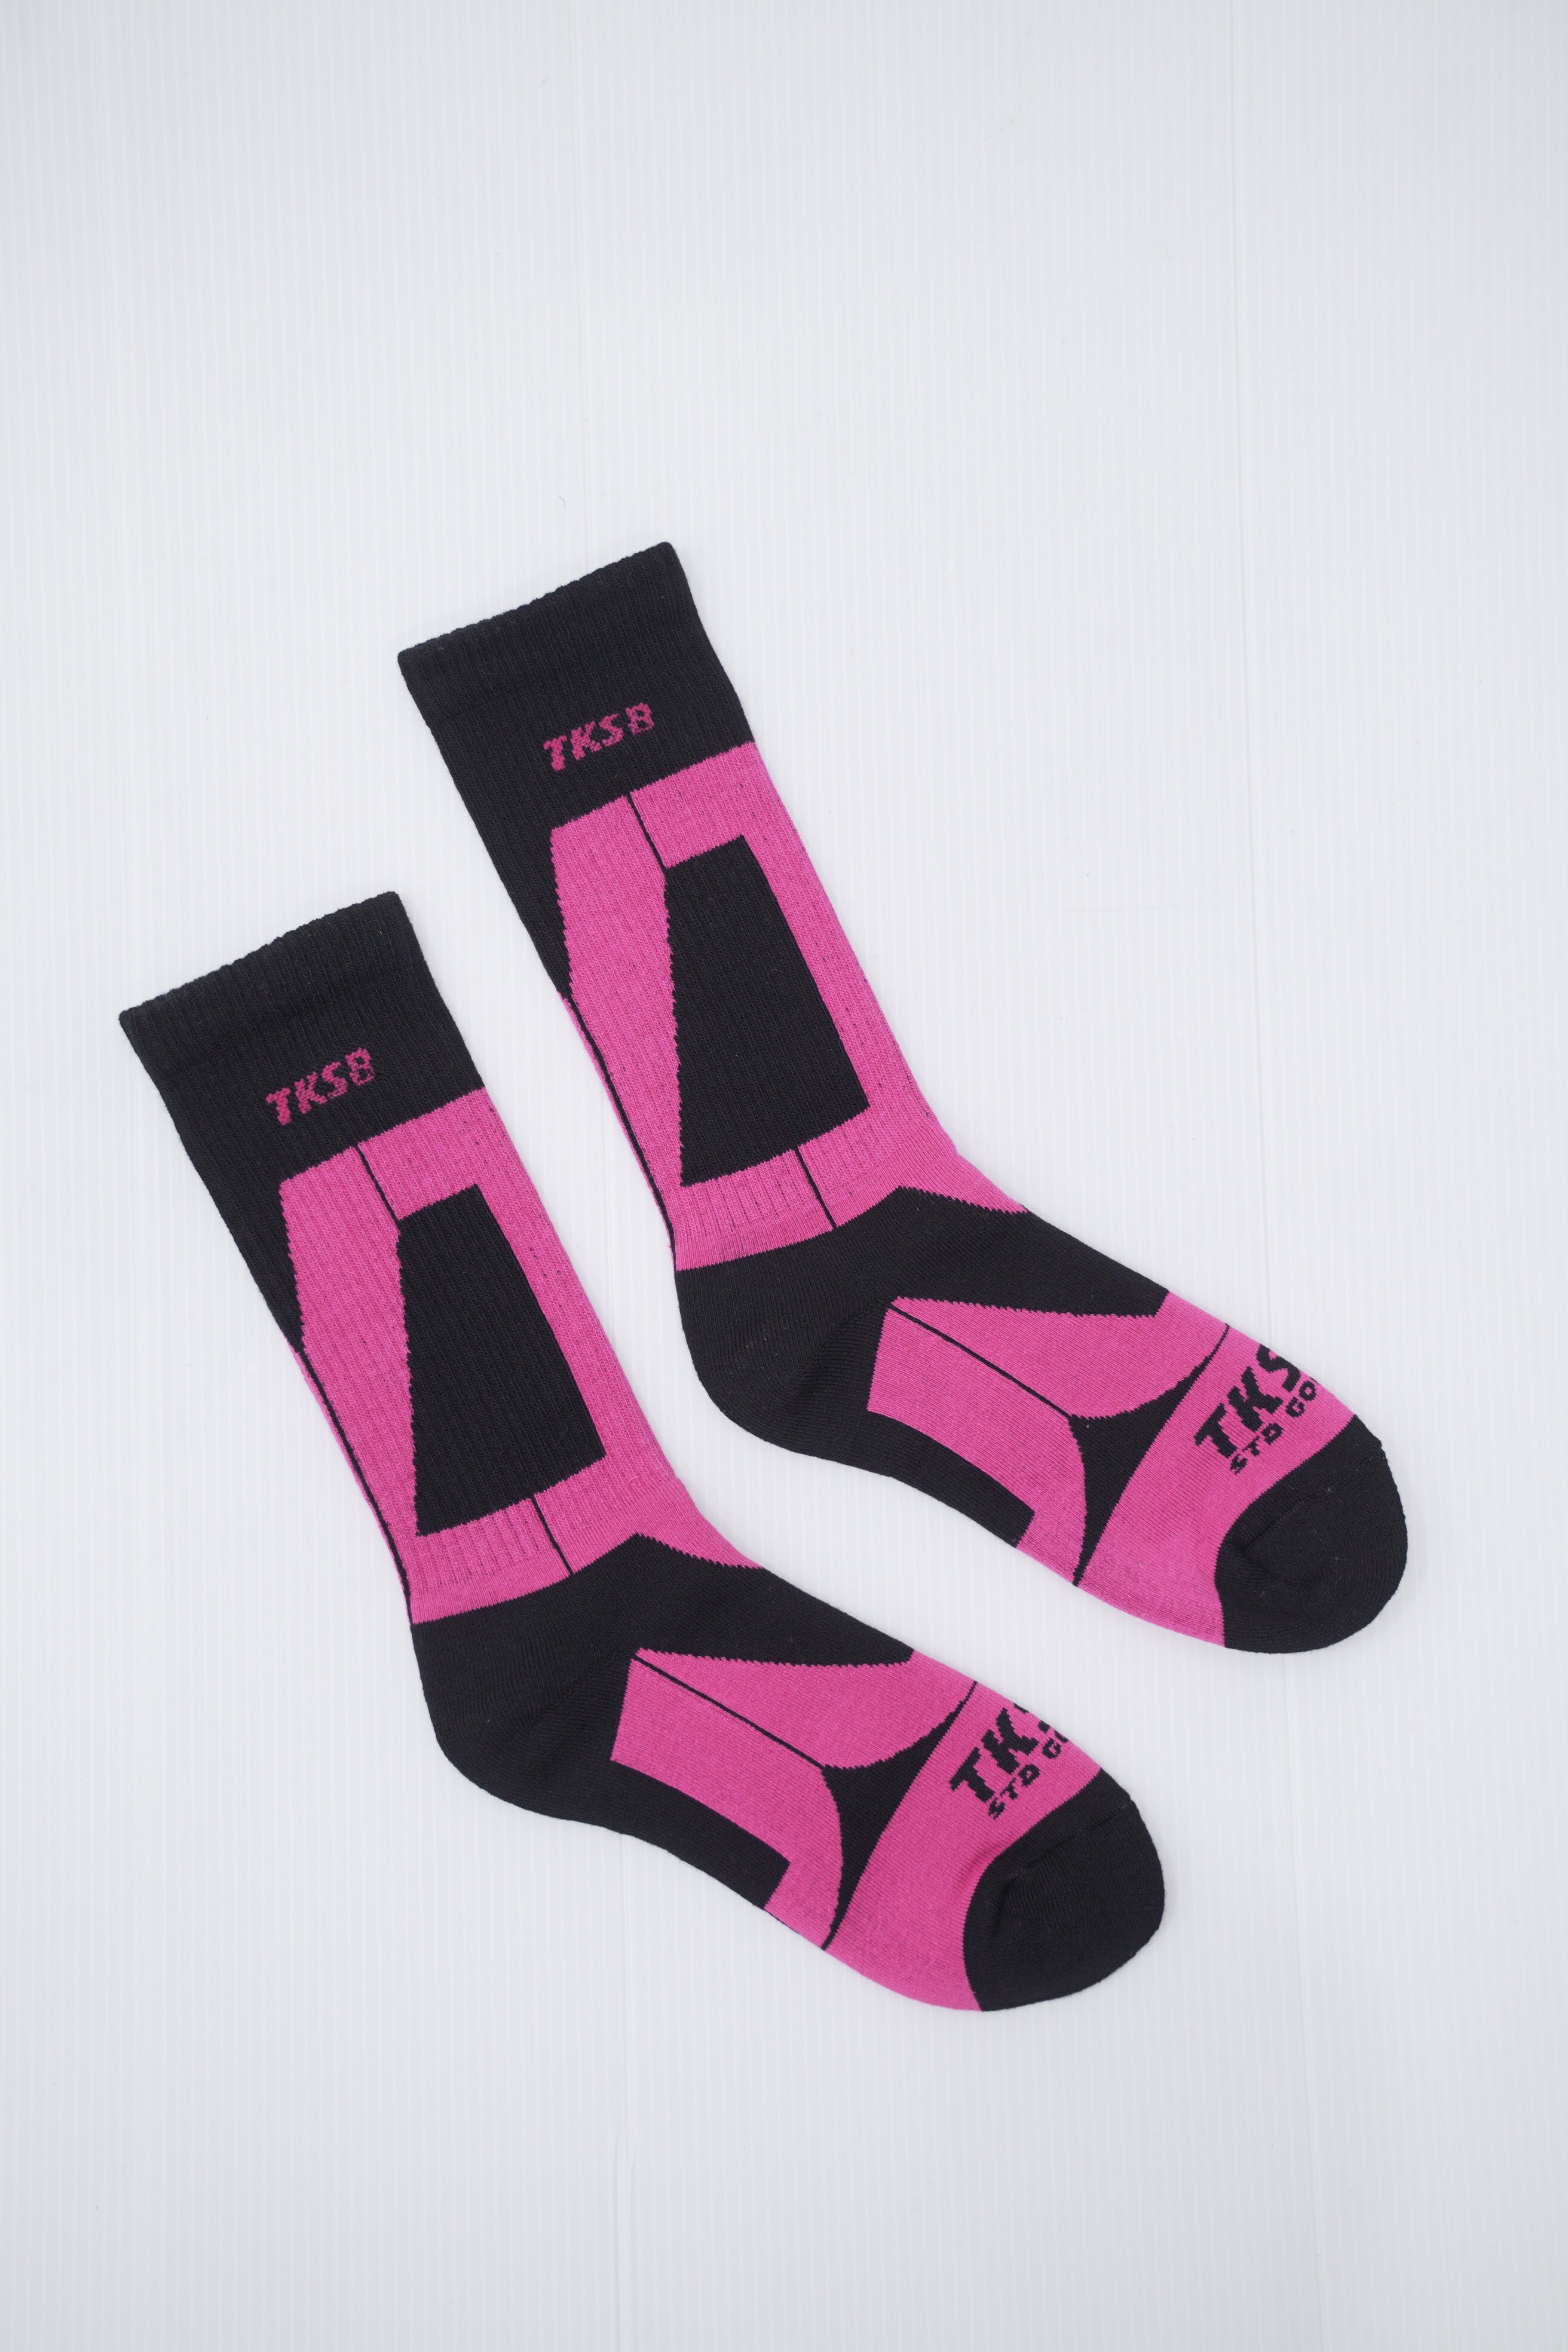 TKSB - Black/Pink TV Socks